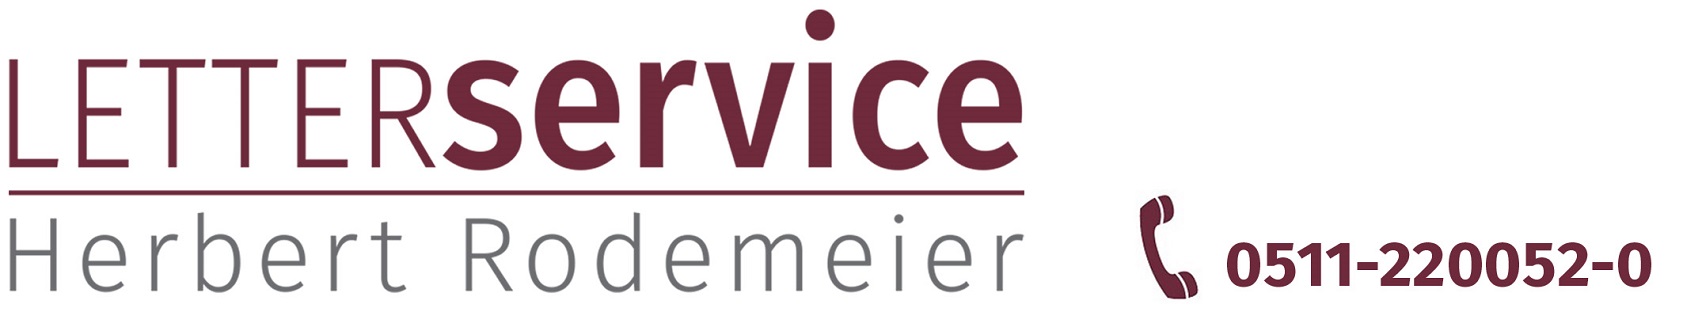 Logo Letterservice Herbert Rodemeier - Lettershop Hannover